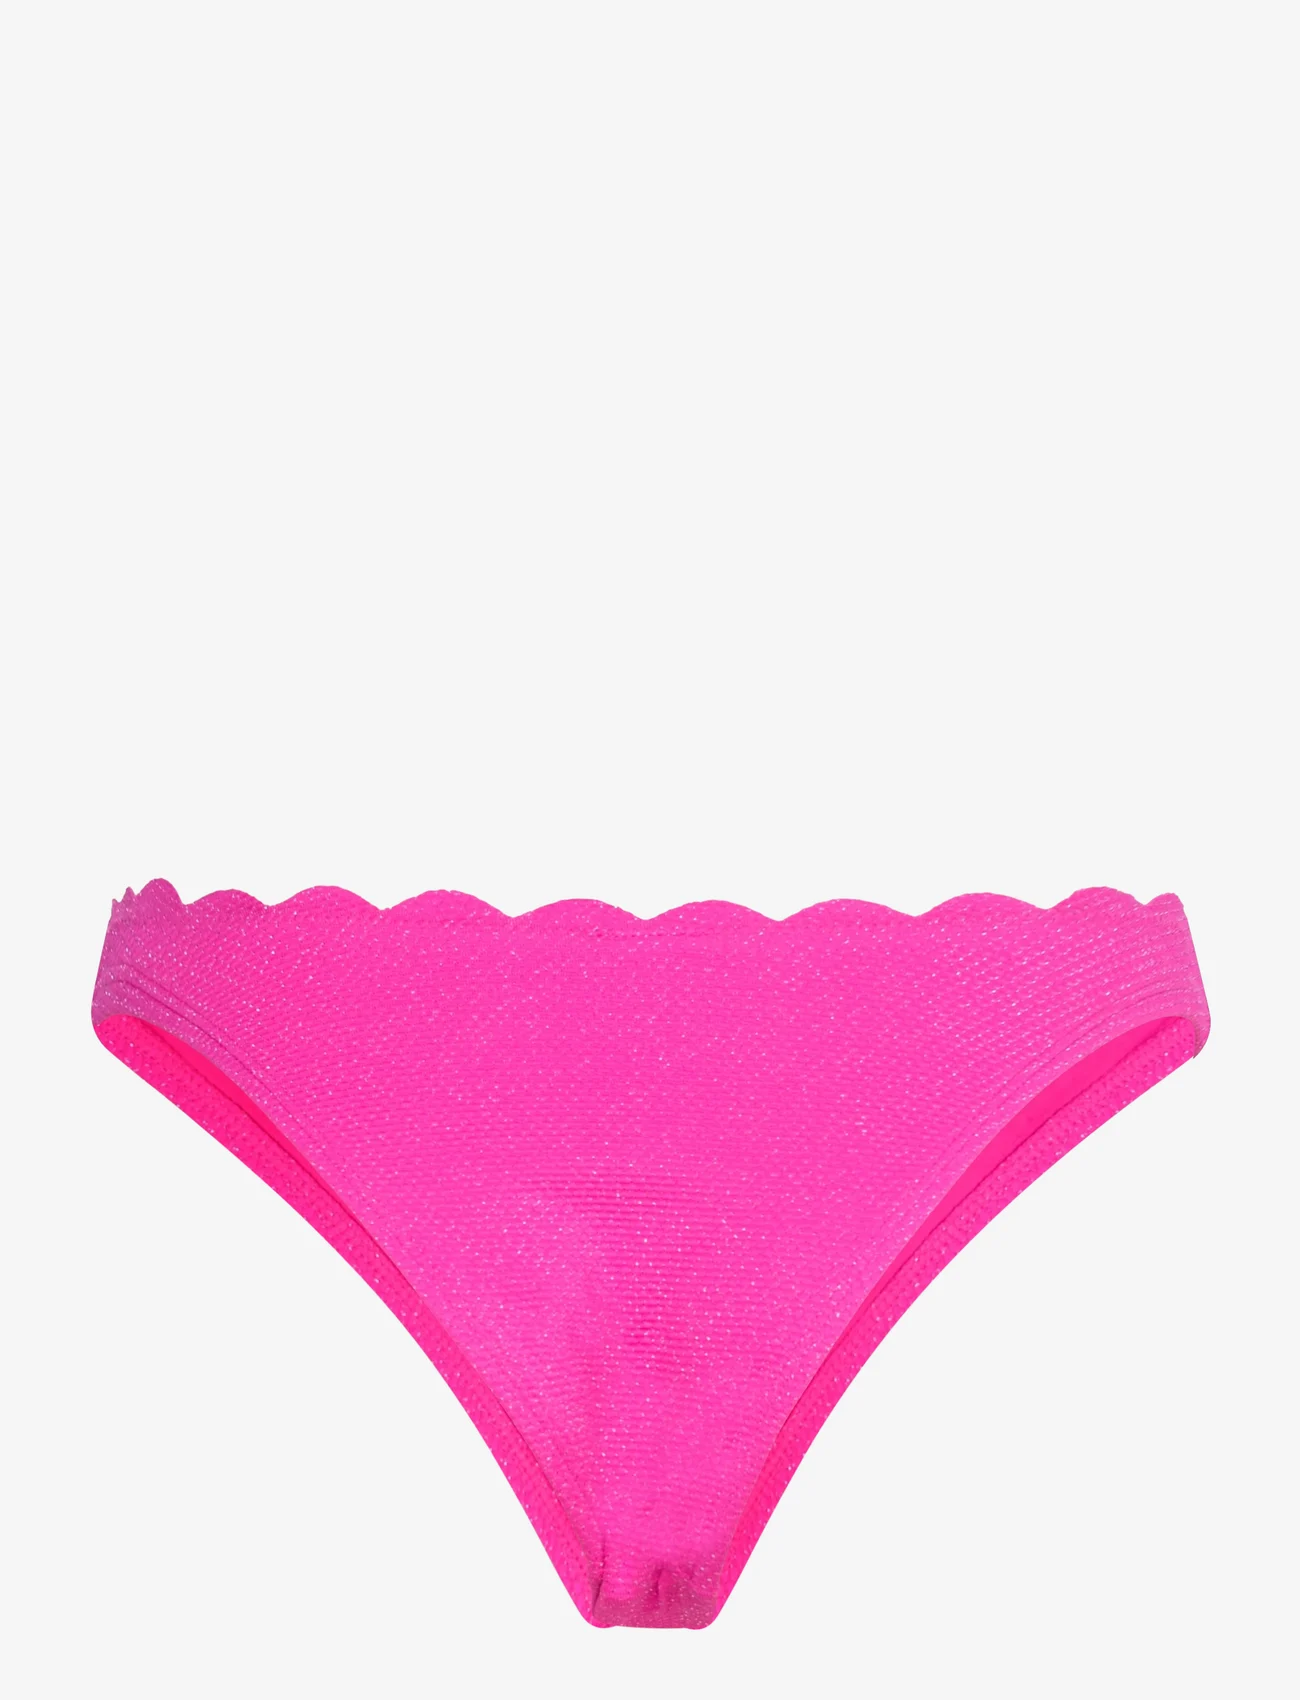 Hunkemöller - Scallop lurex high leg r - bikini briefs - hot pink - 1